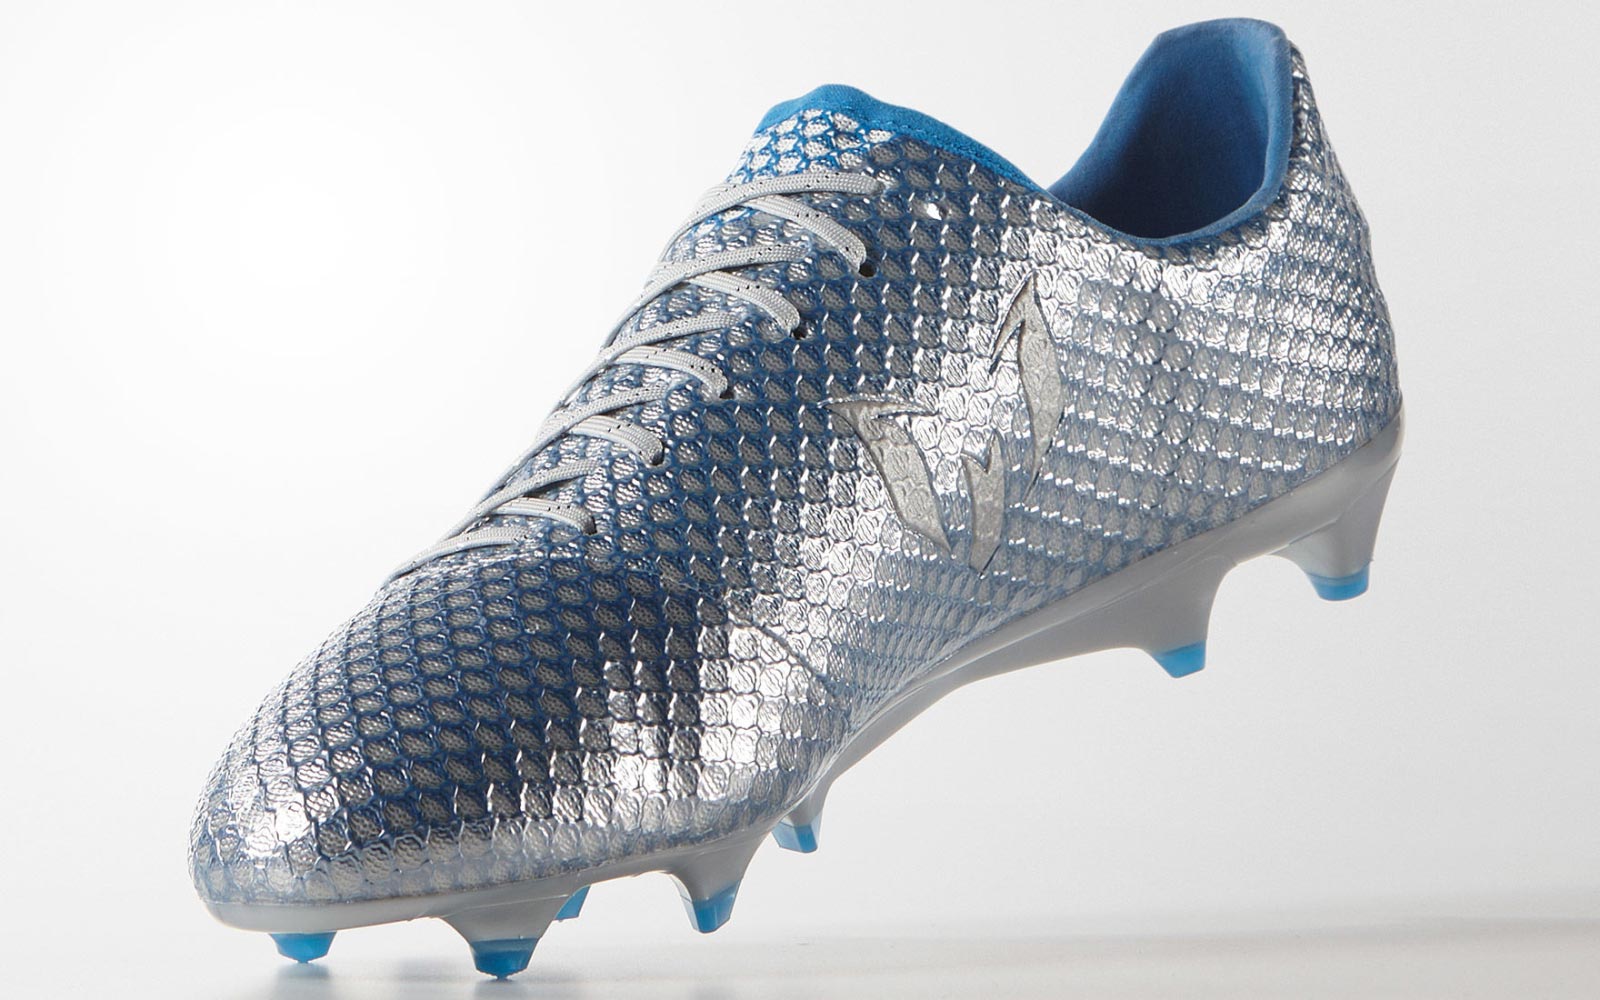 Next-Gen Adidas 2016 Copa America Boots Released - Footy Headlines